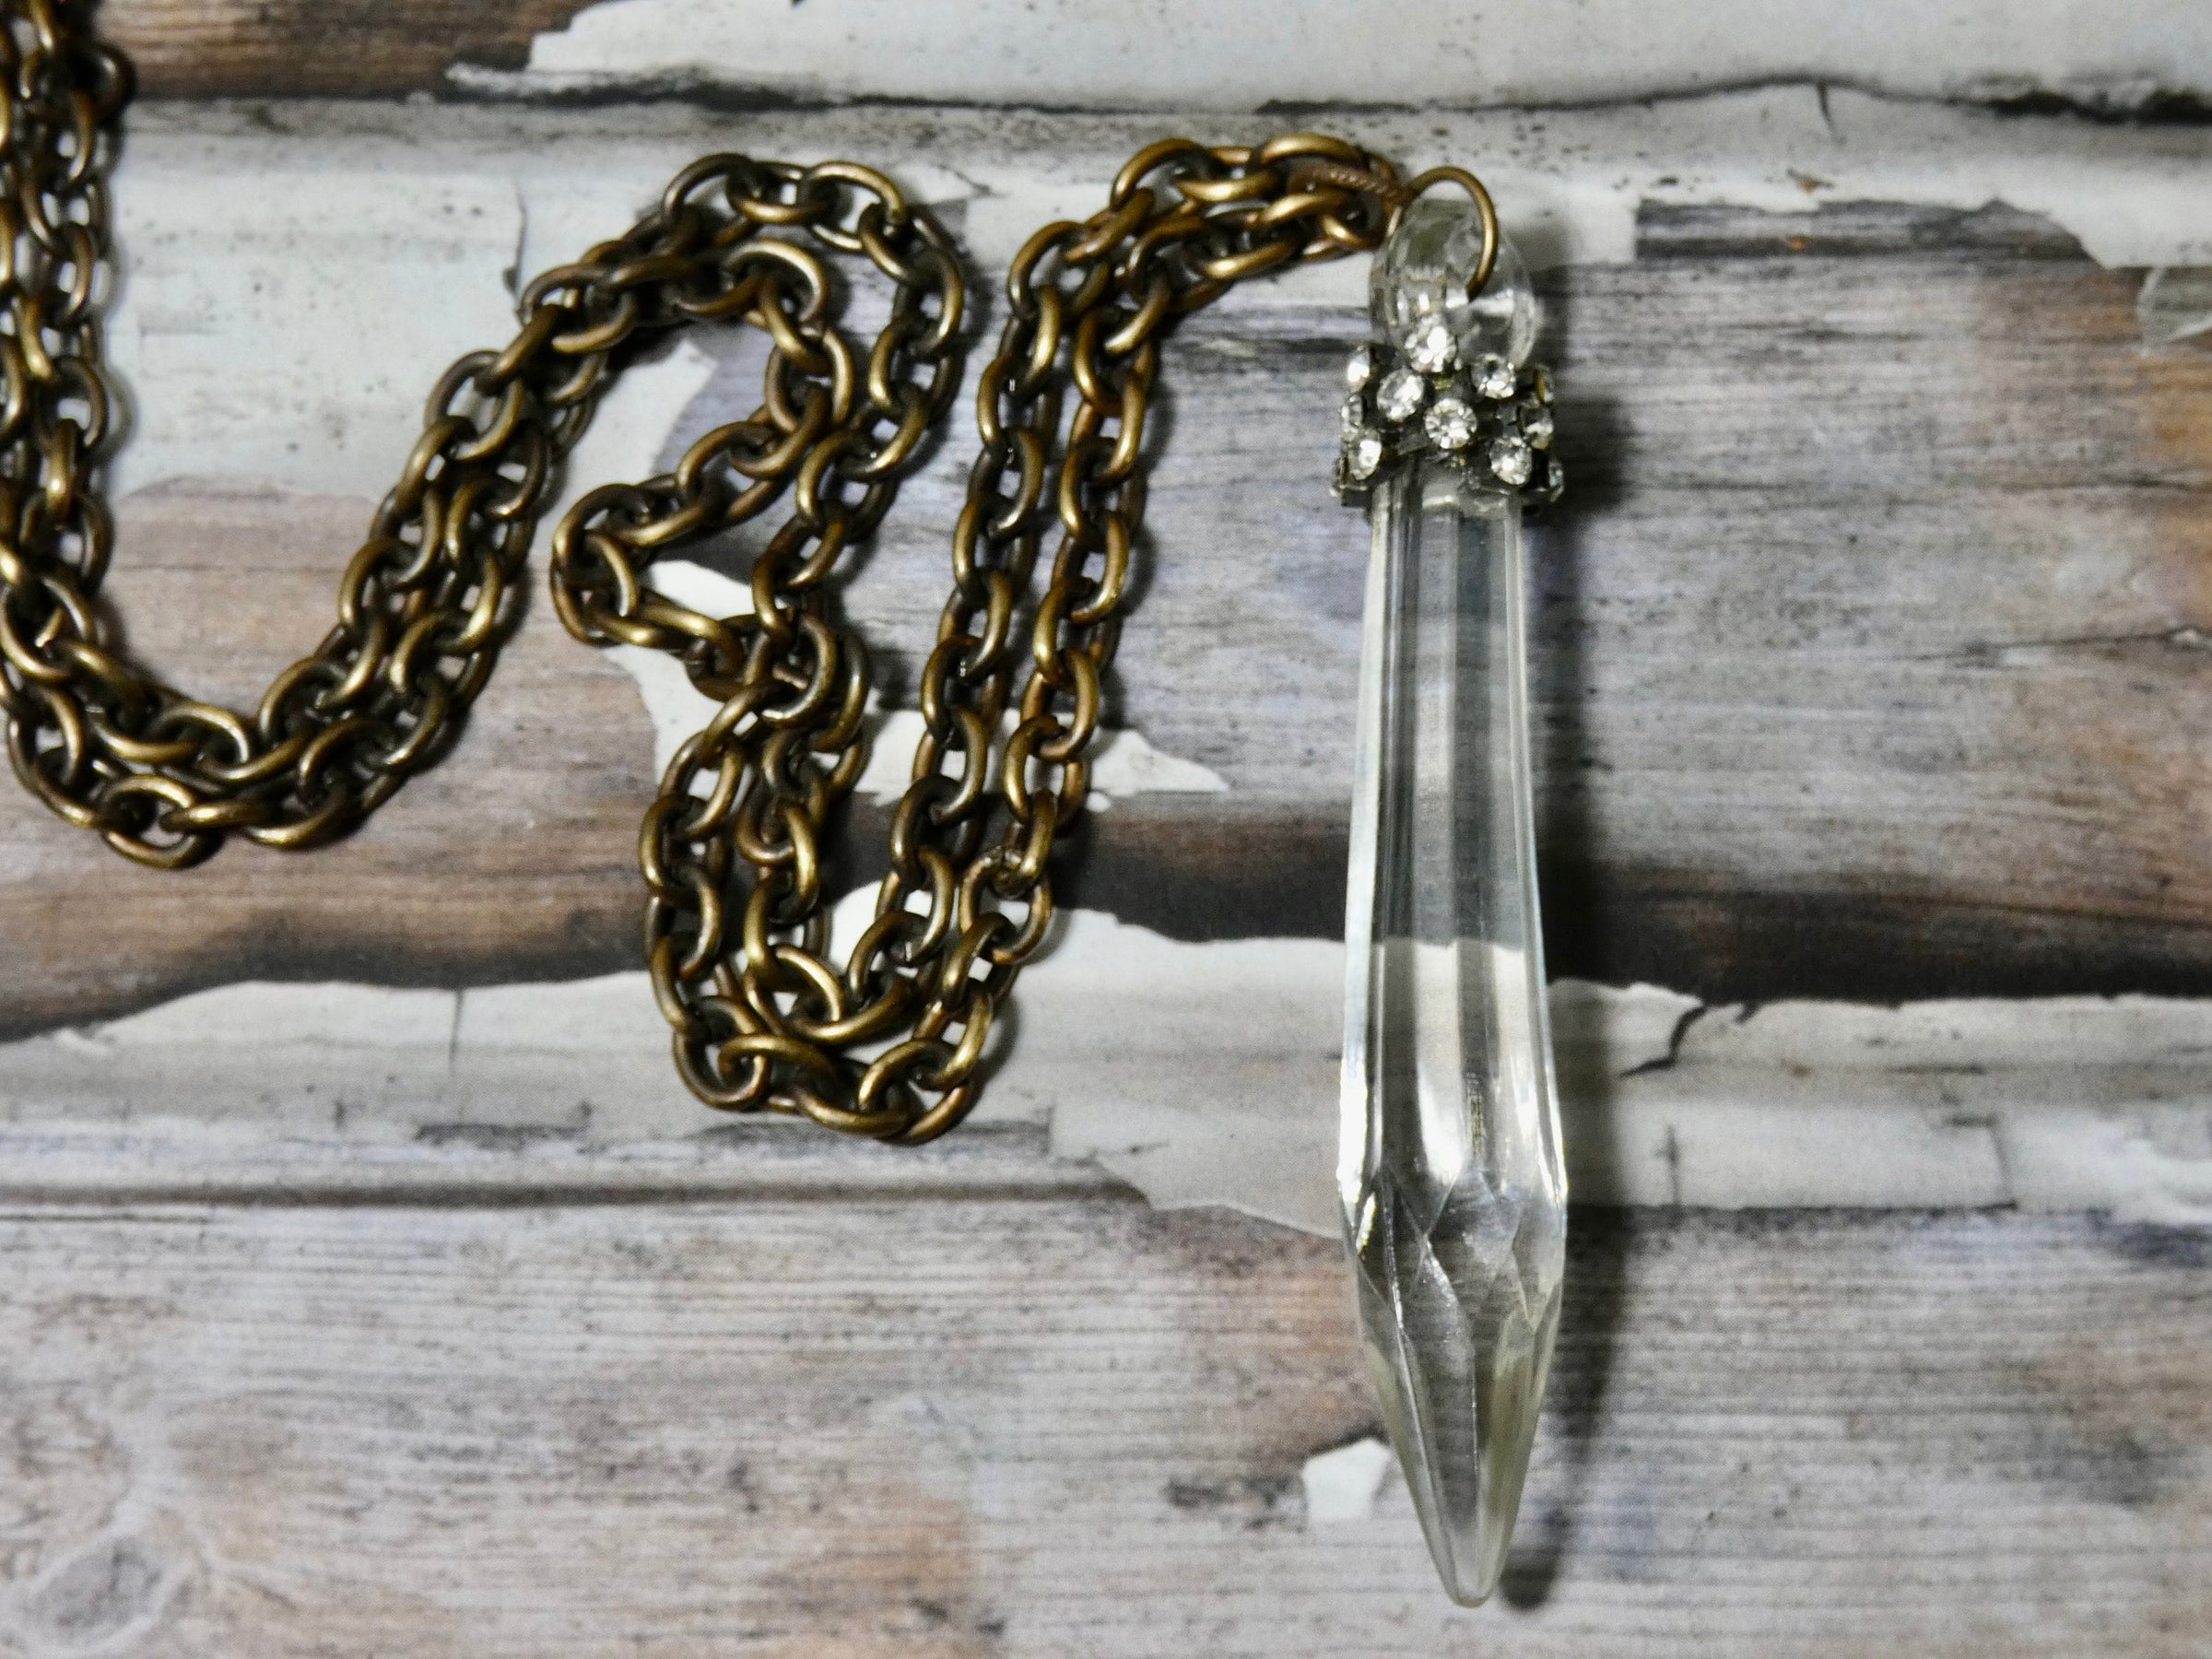 Crystal chandelier Necklace, One of a Kind Vintage